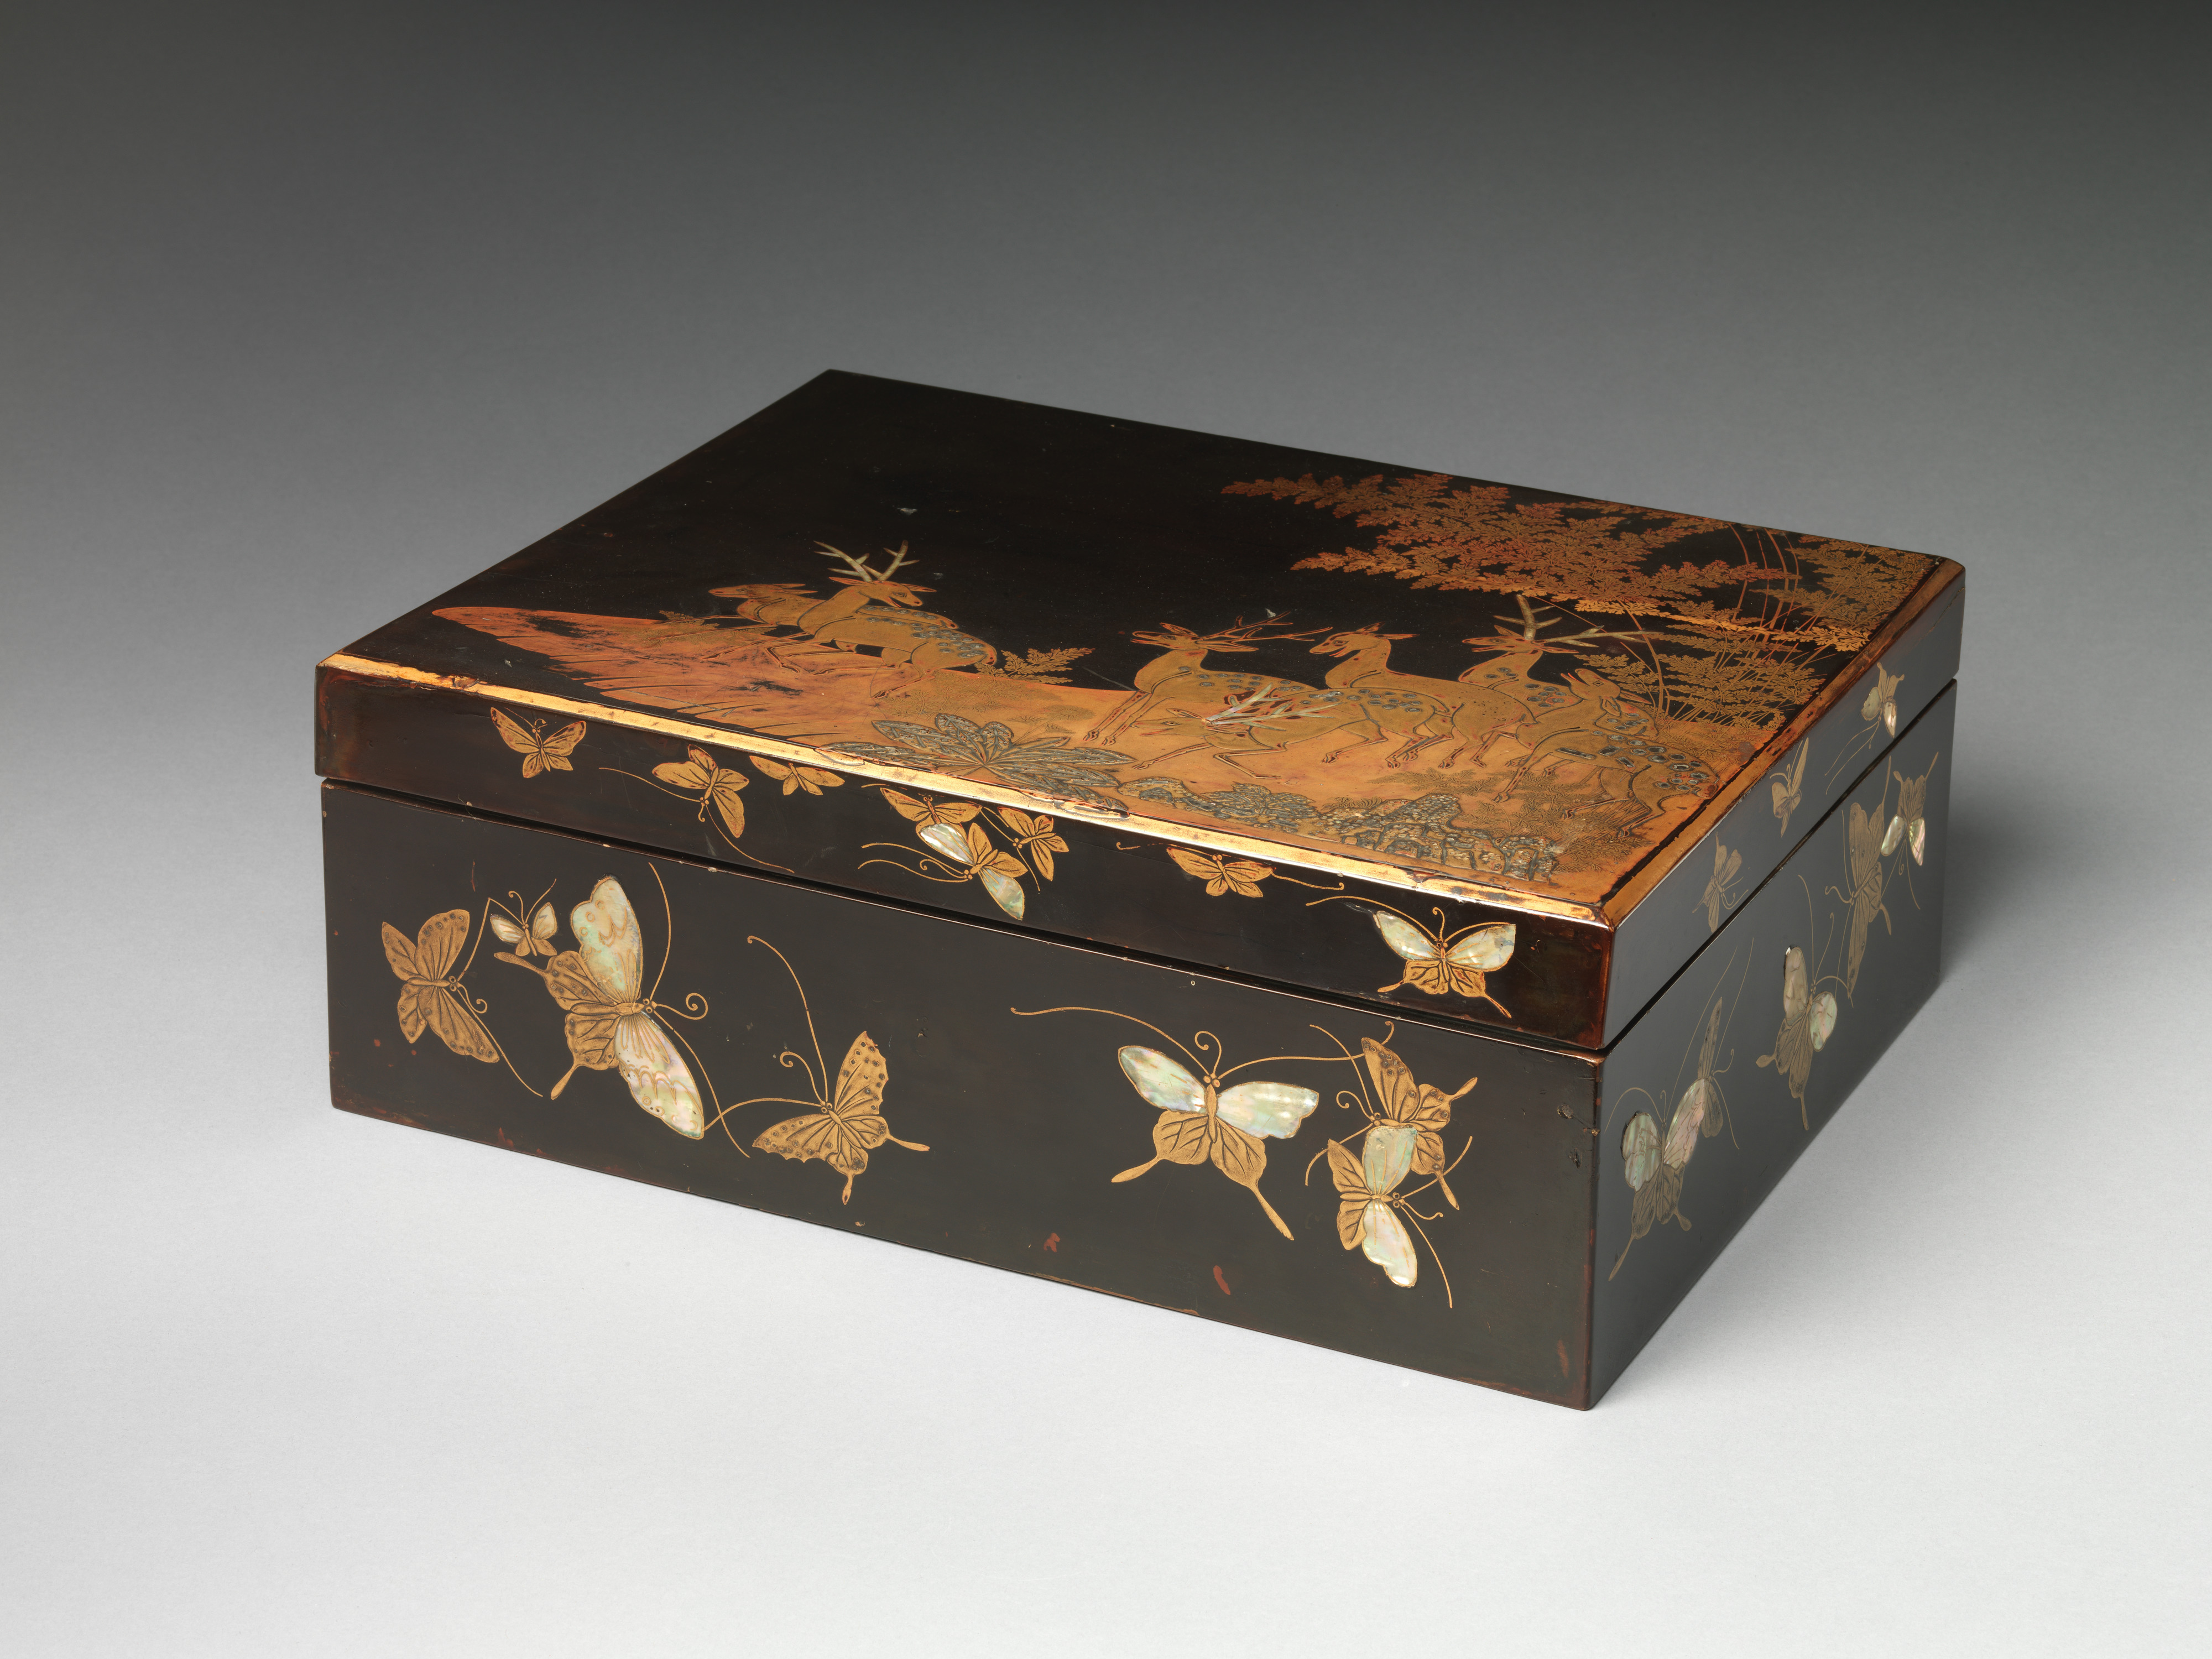 Document Box (Ryōshibako) with Deer and Butterflies, Japan, Edo period  (1615–1868)